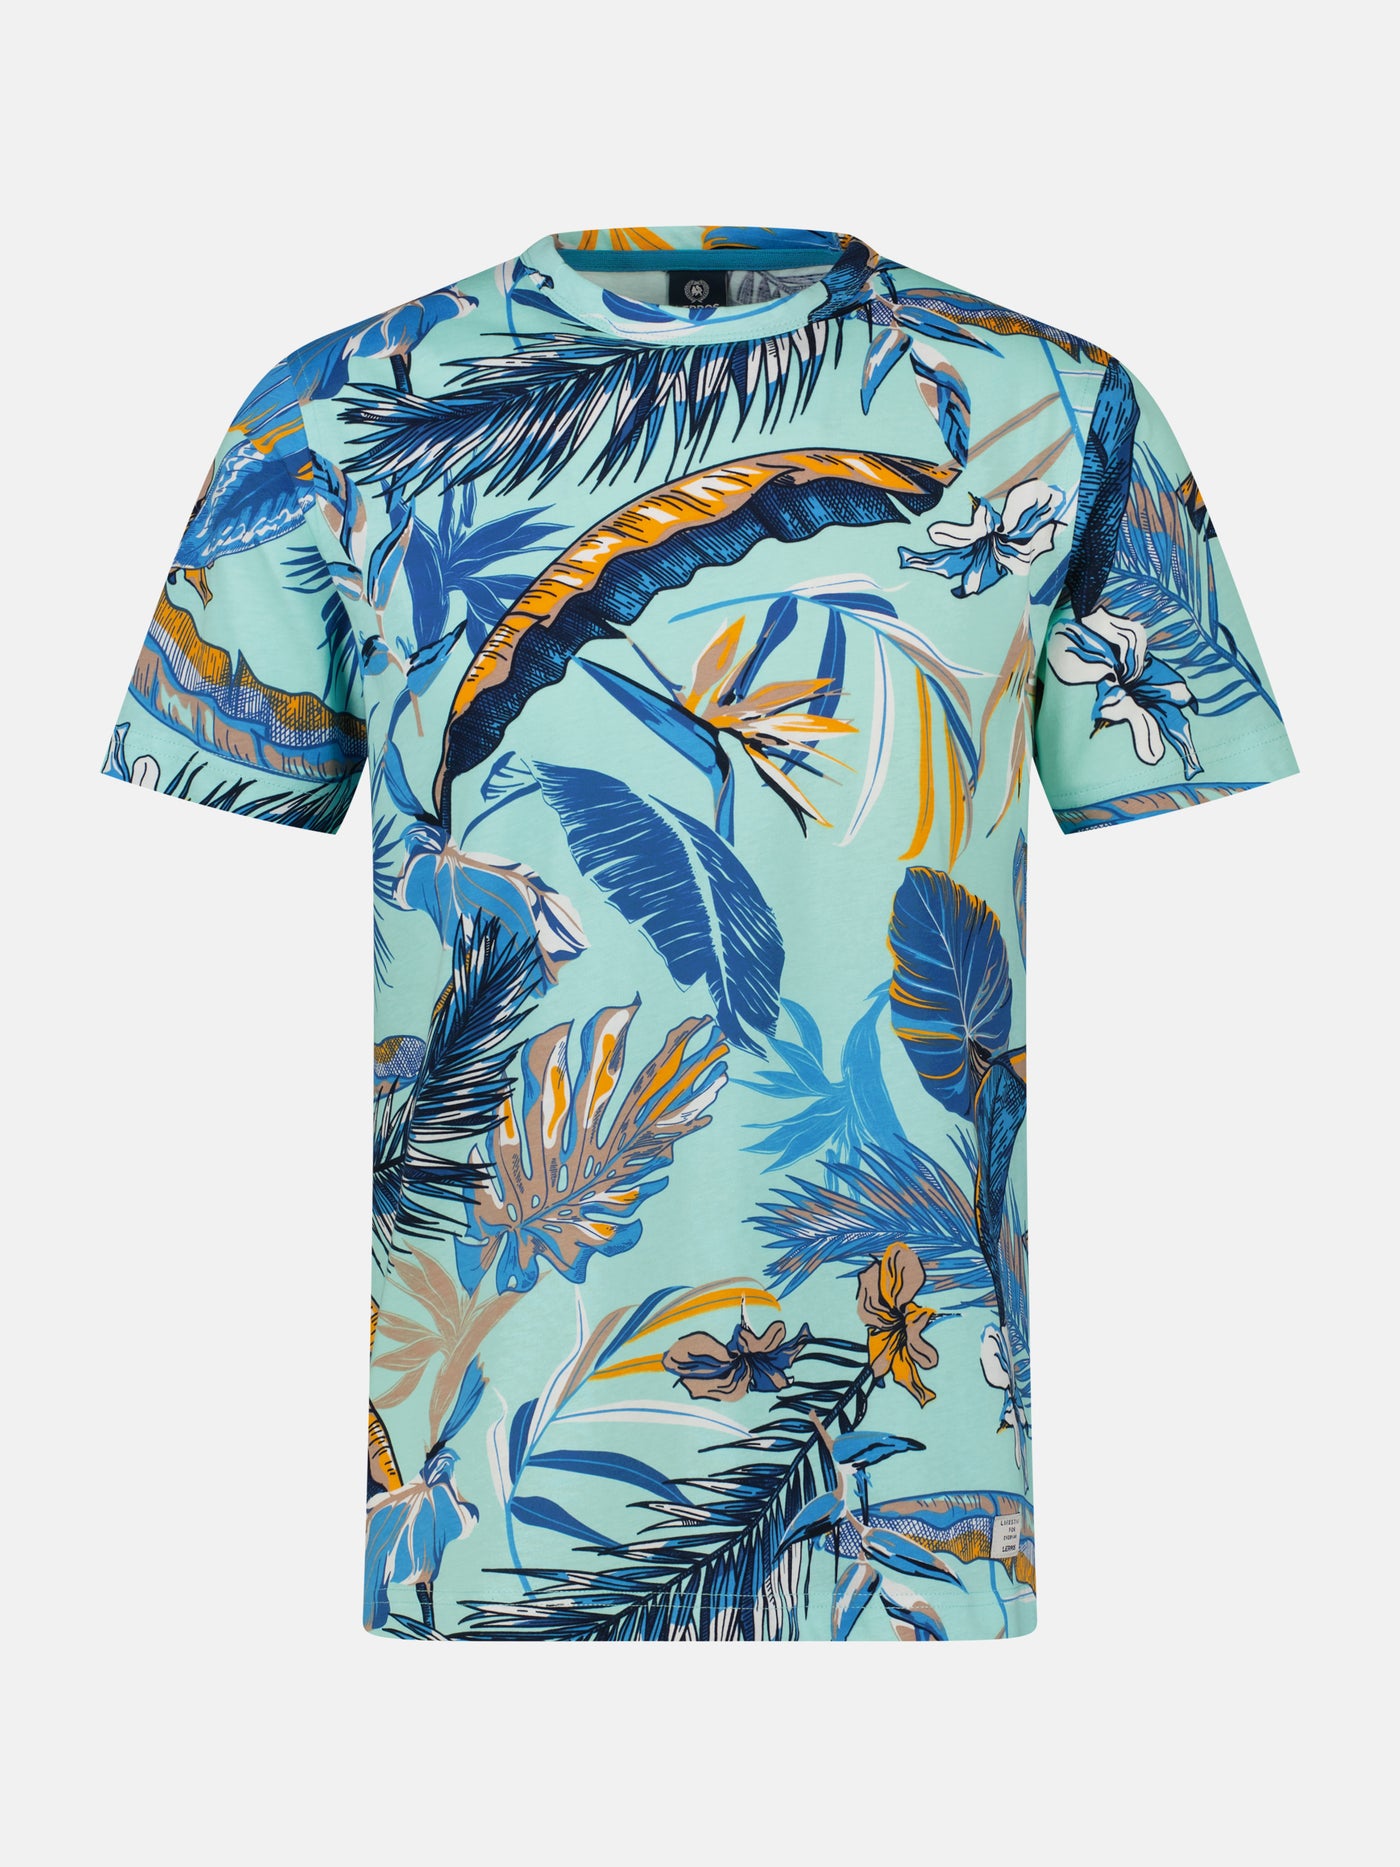 Hawaiian style T-shirt